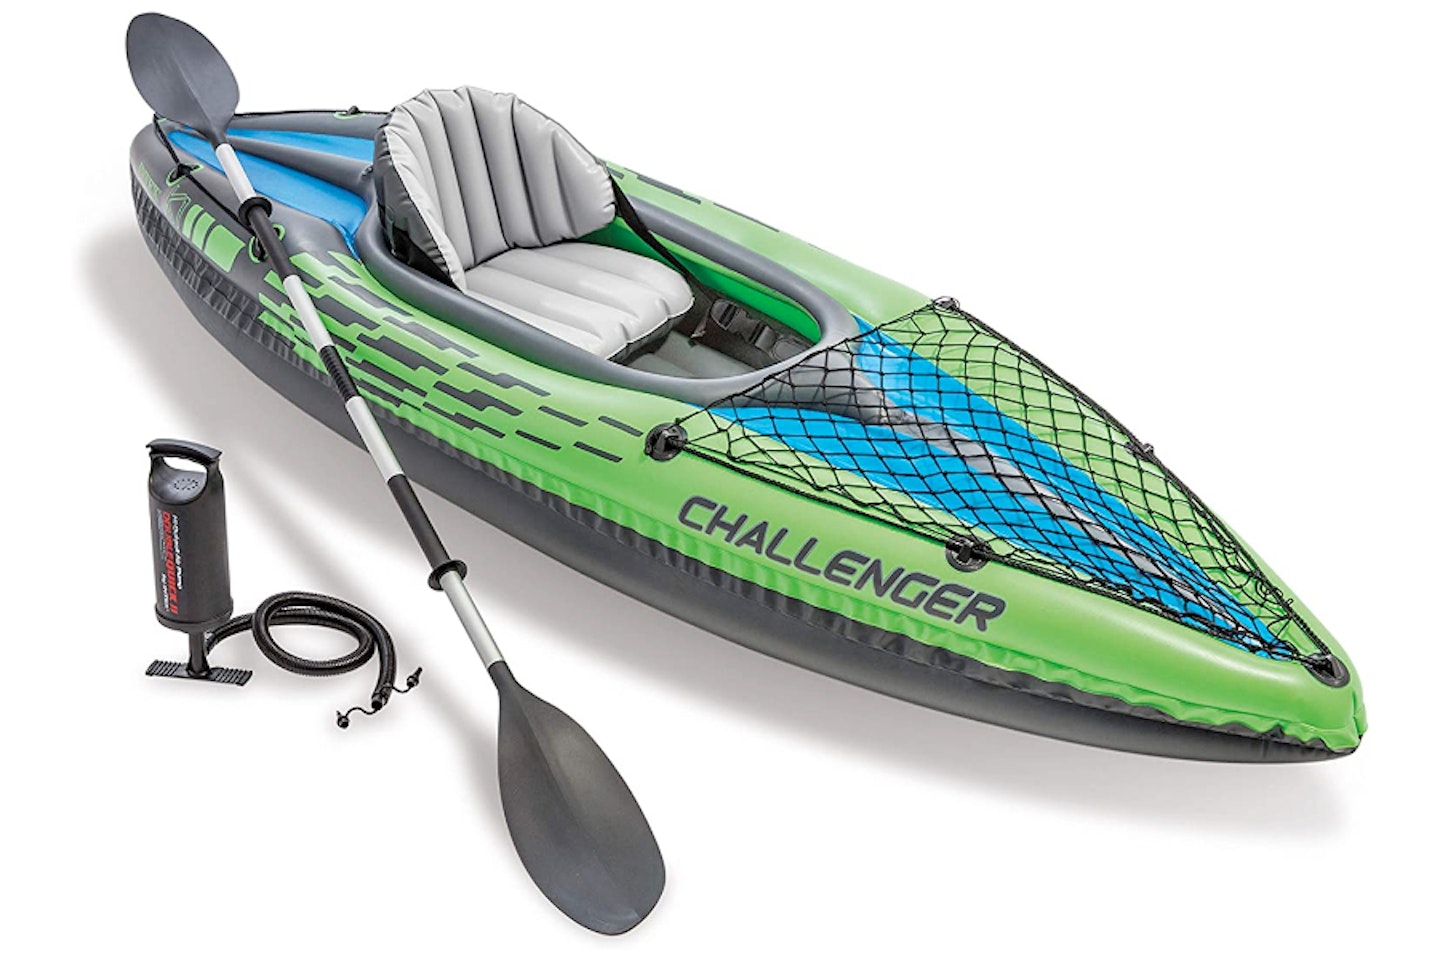 Intex Challenger Kayak